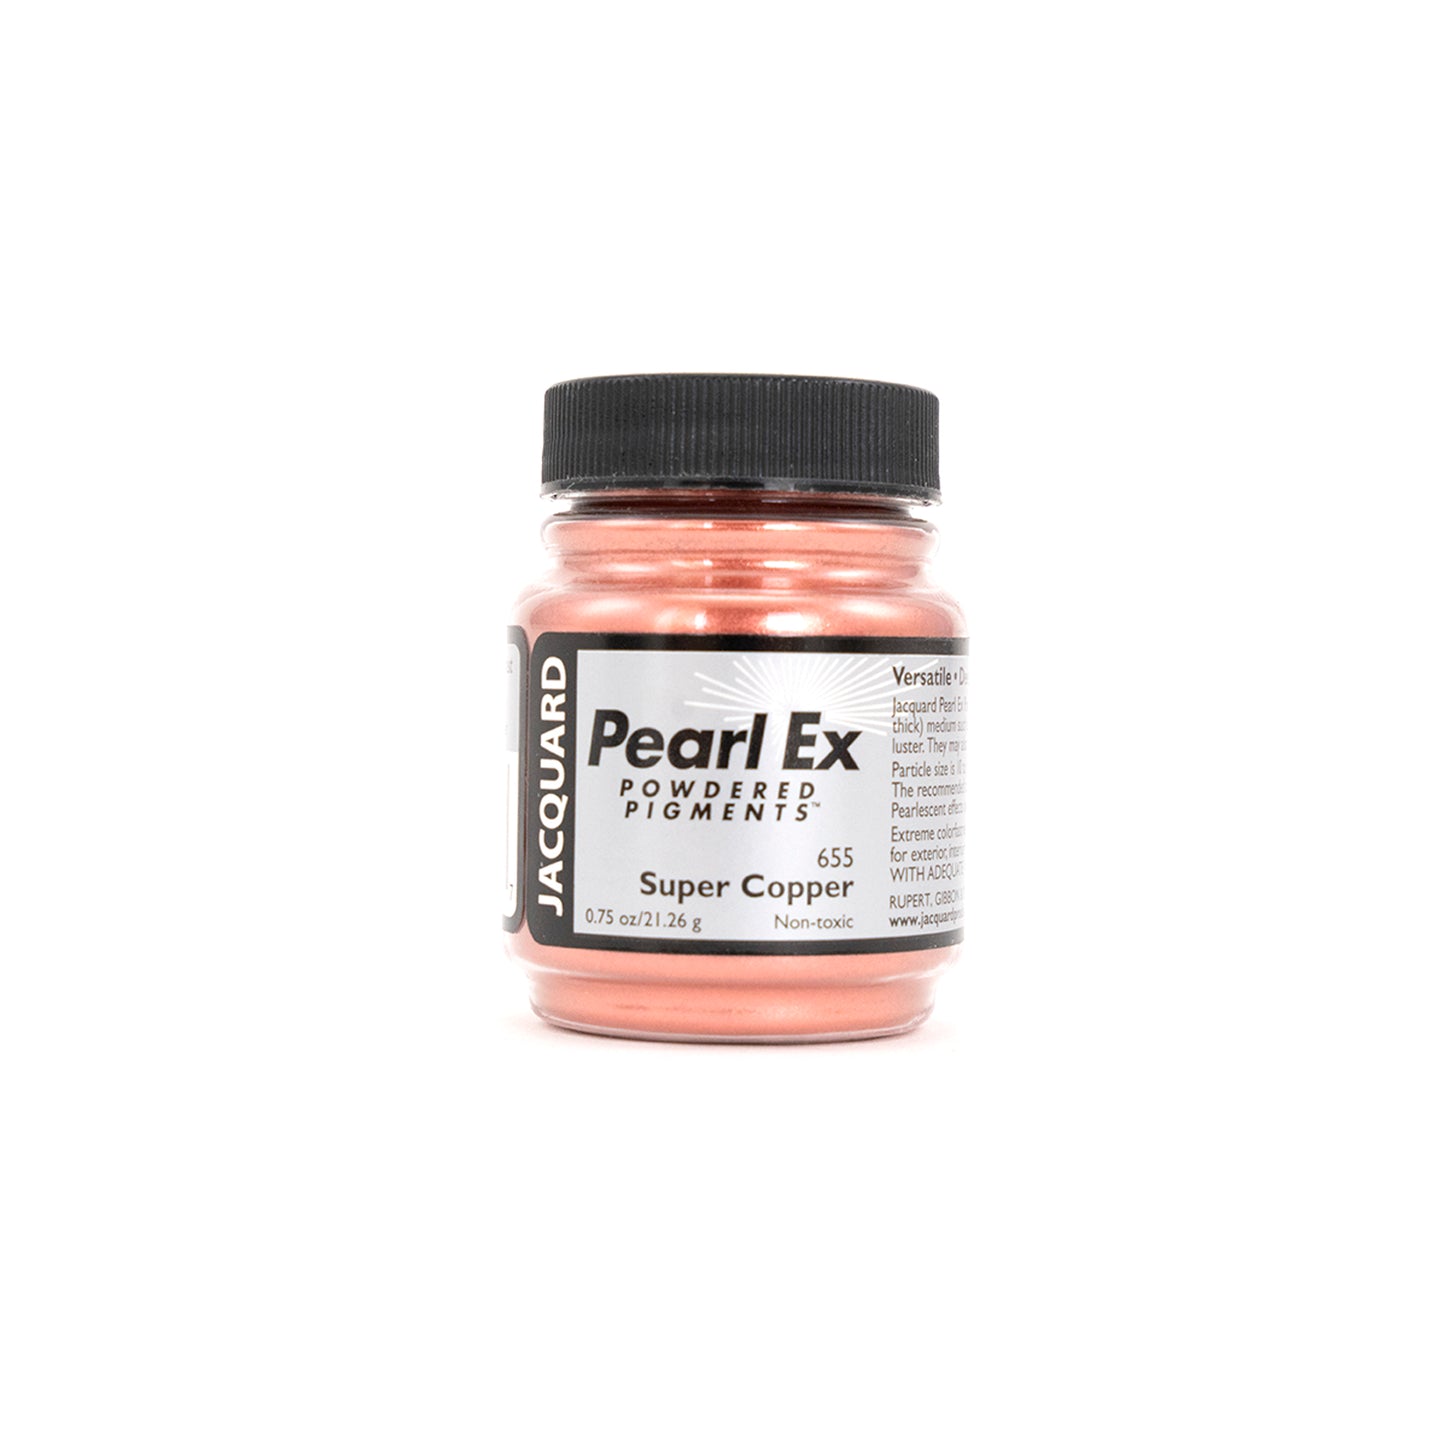 Jacquard PearlEx Powdered Pigments - 0.75 oz jars - Super-Copper by Jacquard - K. A. Artist Shop